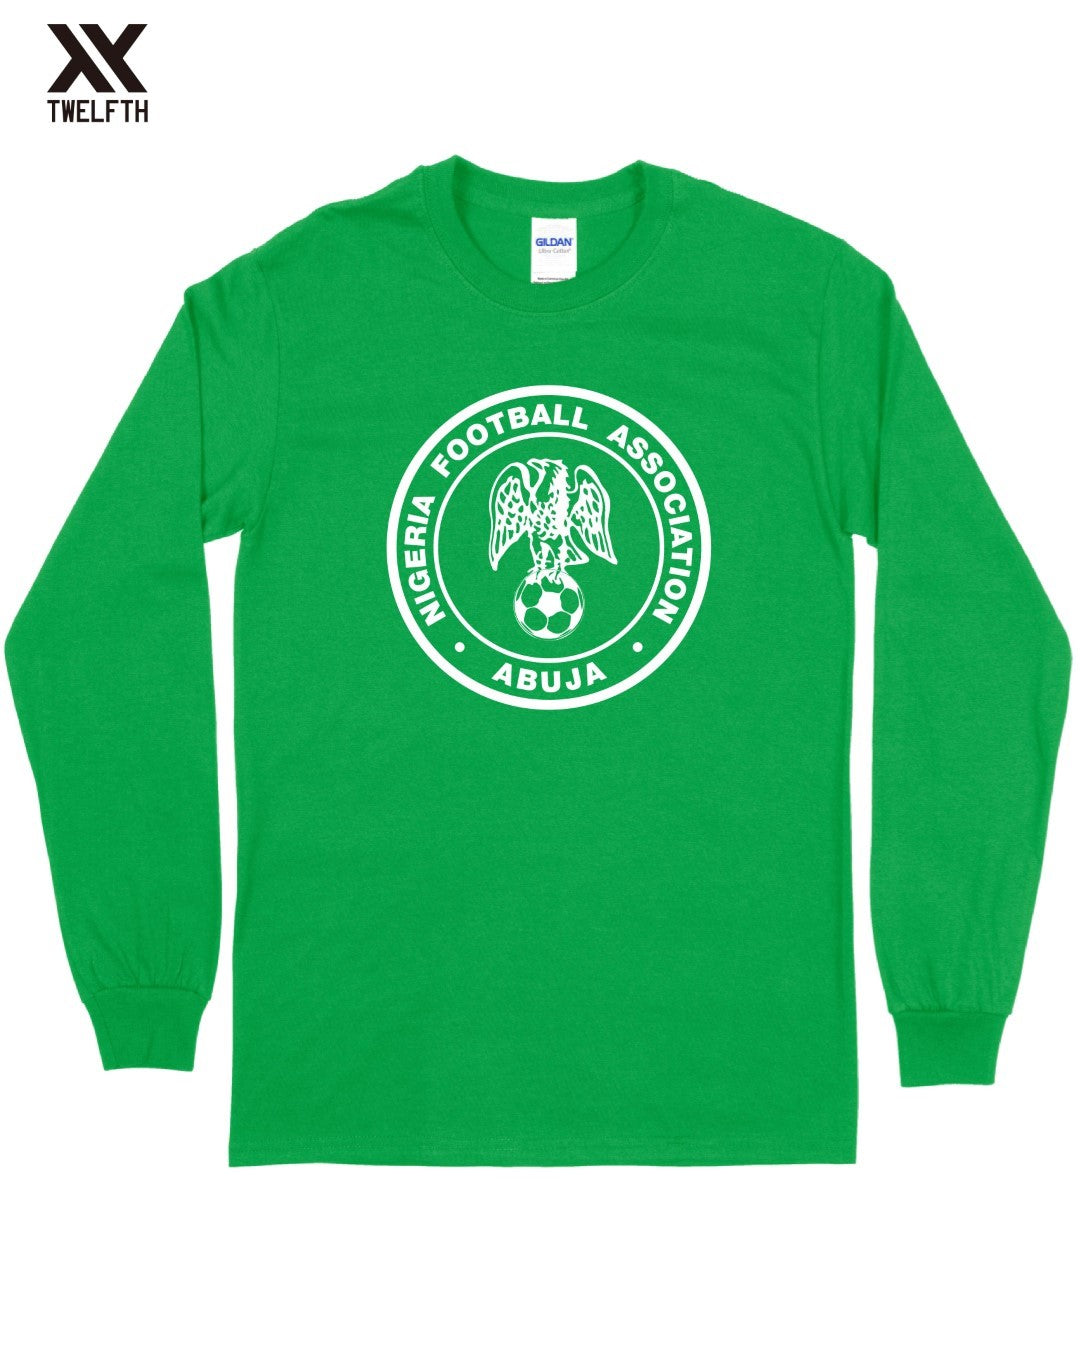 Nigeria Crest T-Shirt - Mens